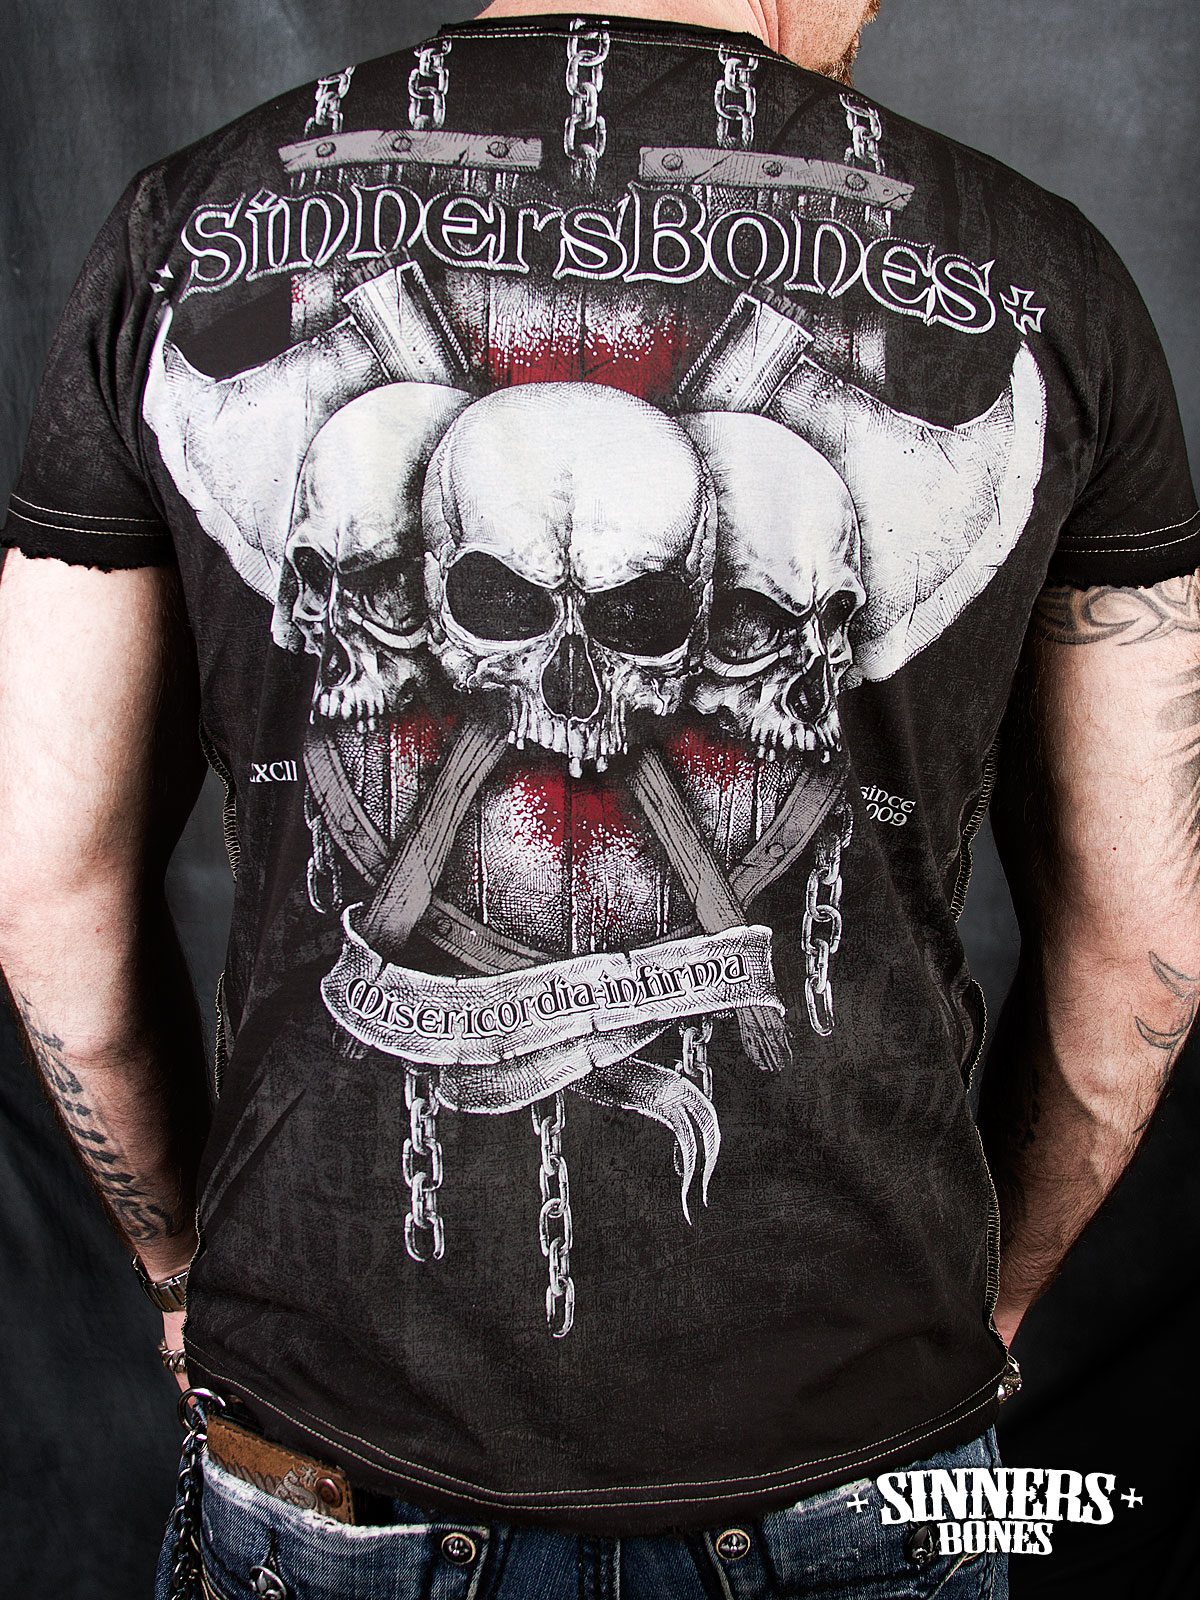 Bone интернет магазин. Футболка Sinner's Bones. Sinners одежда. "Sinner's Bones" продавец. Sinner, s Bones логотип.